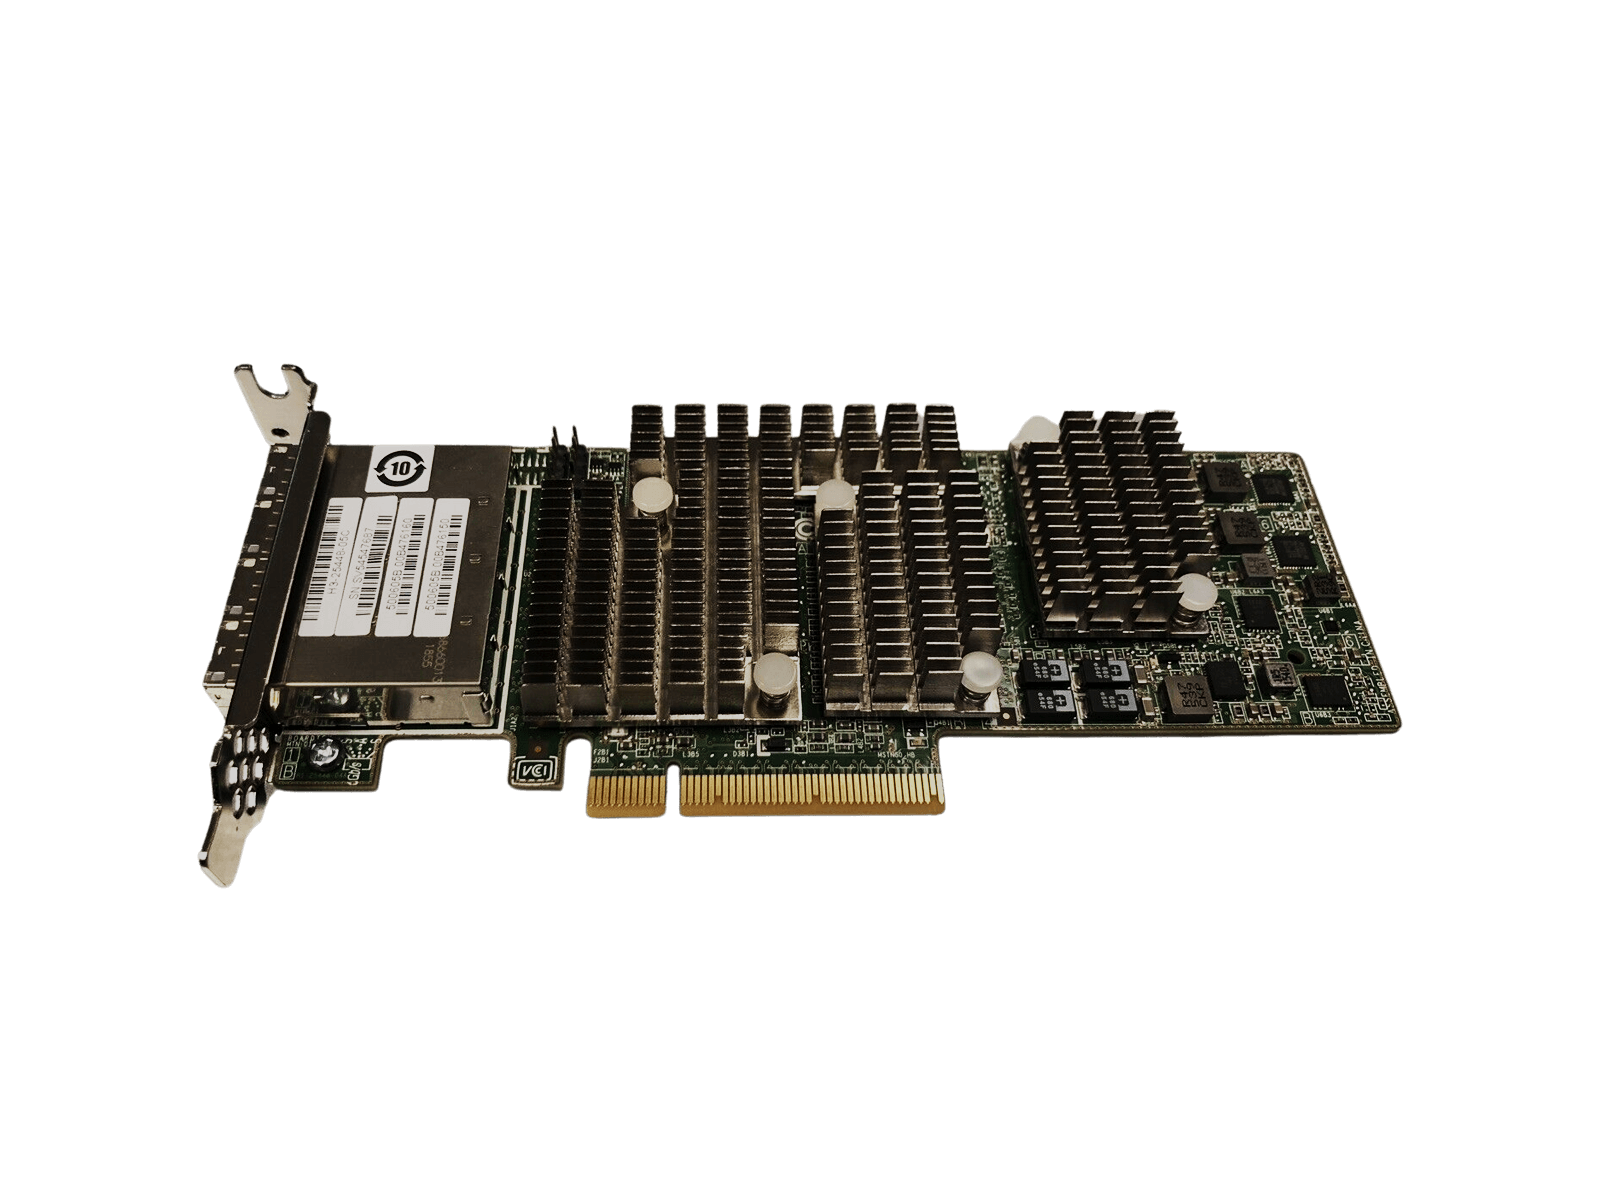 LSI 9206-16e 6Gb/s 16-Port SATA SAS PCI-e 3.0 x8 External HBA LP or FH SFF8644 H3-25448-05C.